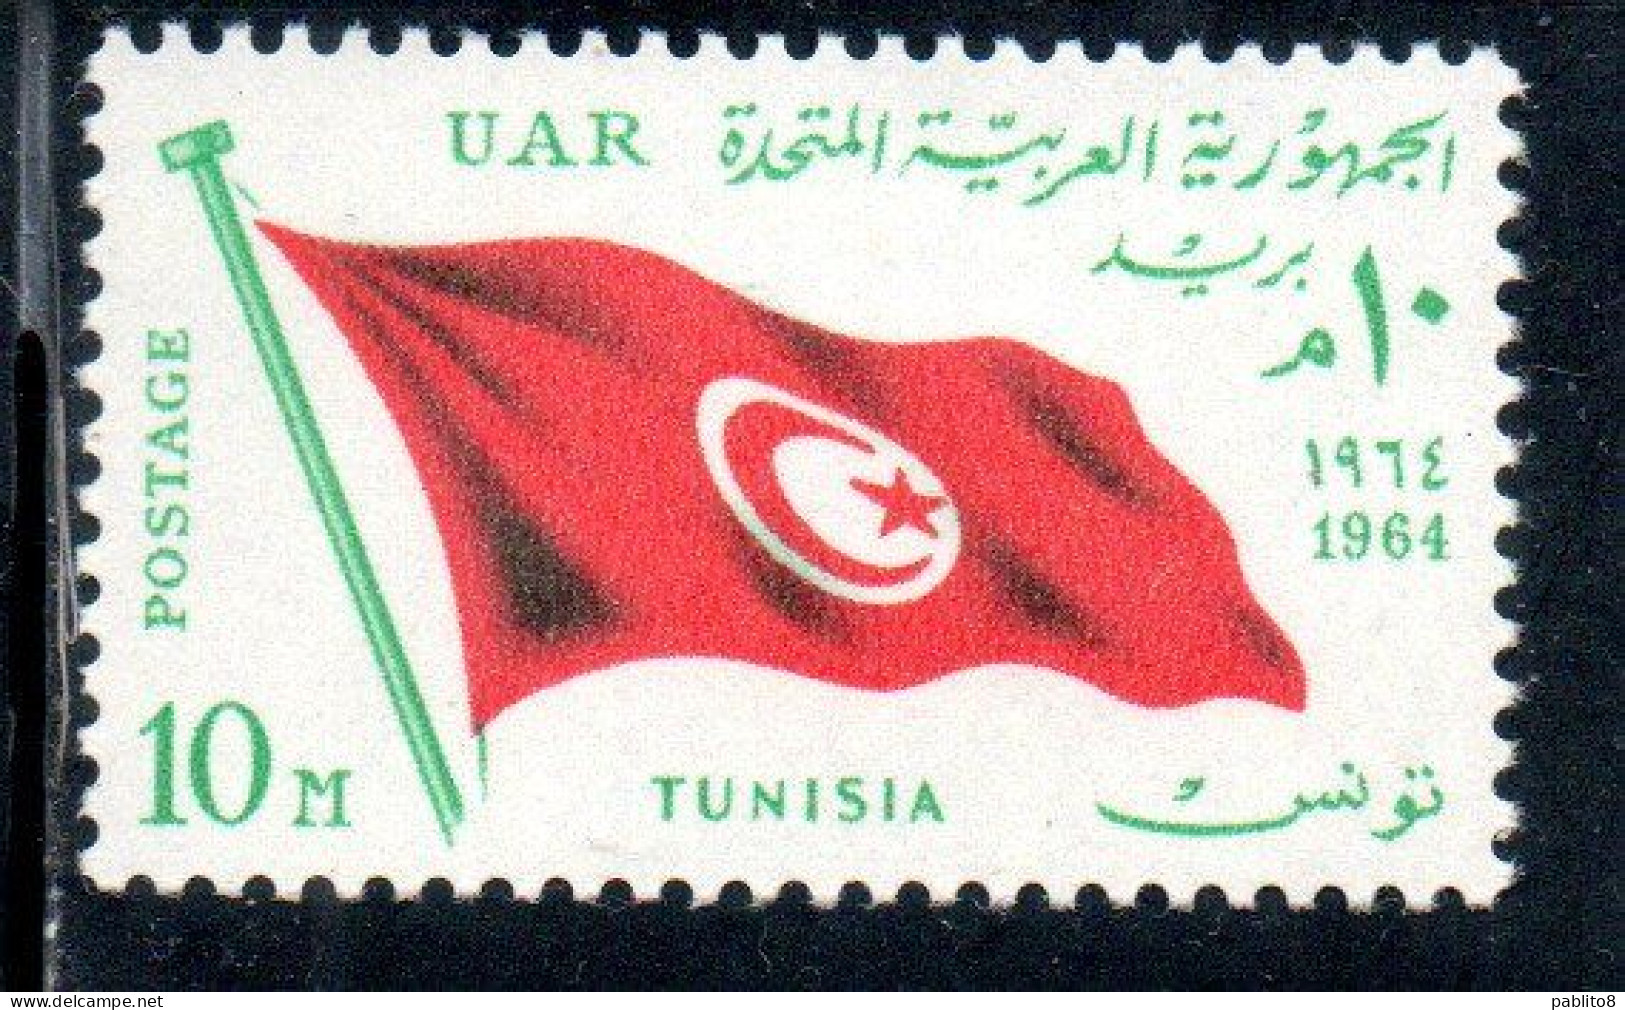 UAR EGYPT EGITTO 1964 SECOND MEETING OF HEADS STATE ARAB LEAGUE FLAG OF TUNISIA 10m MNH - Neufs